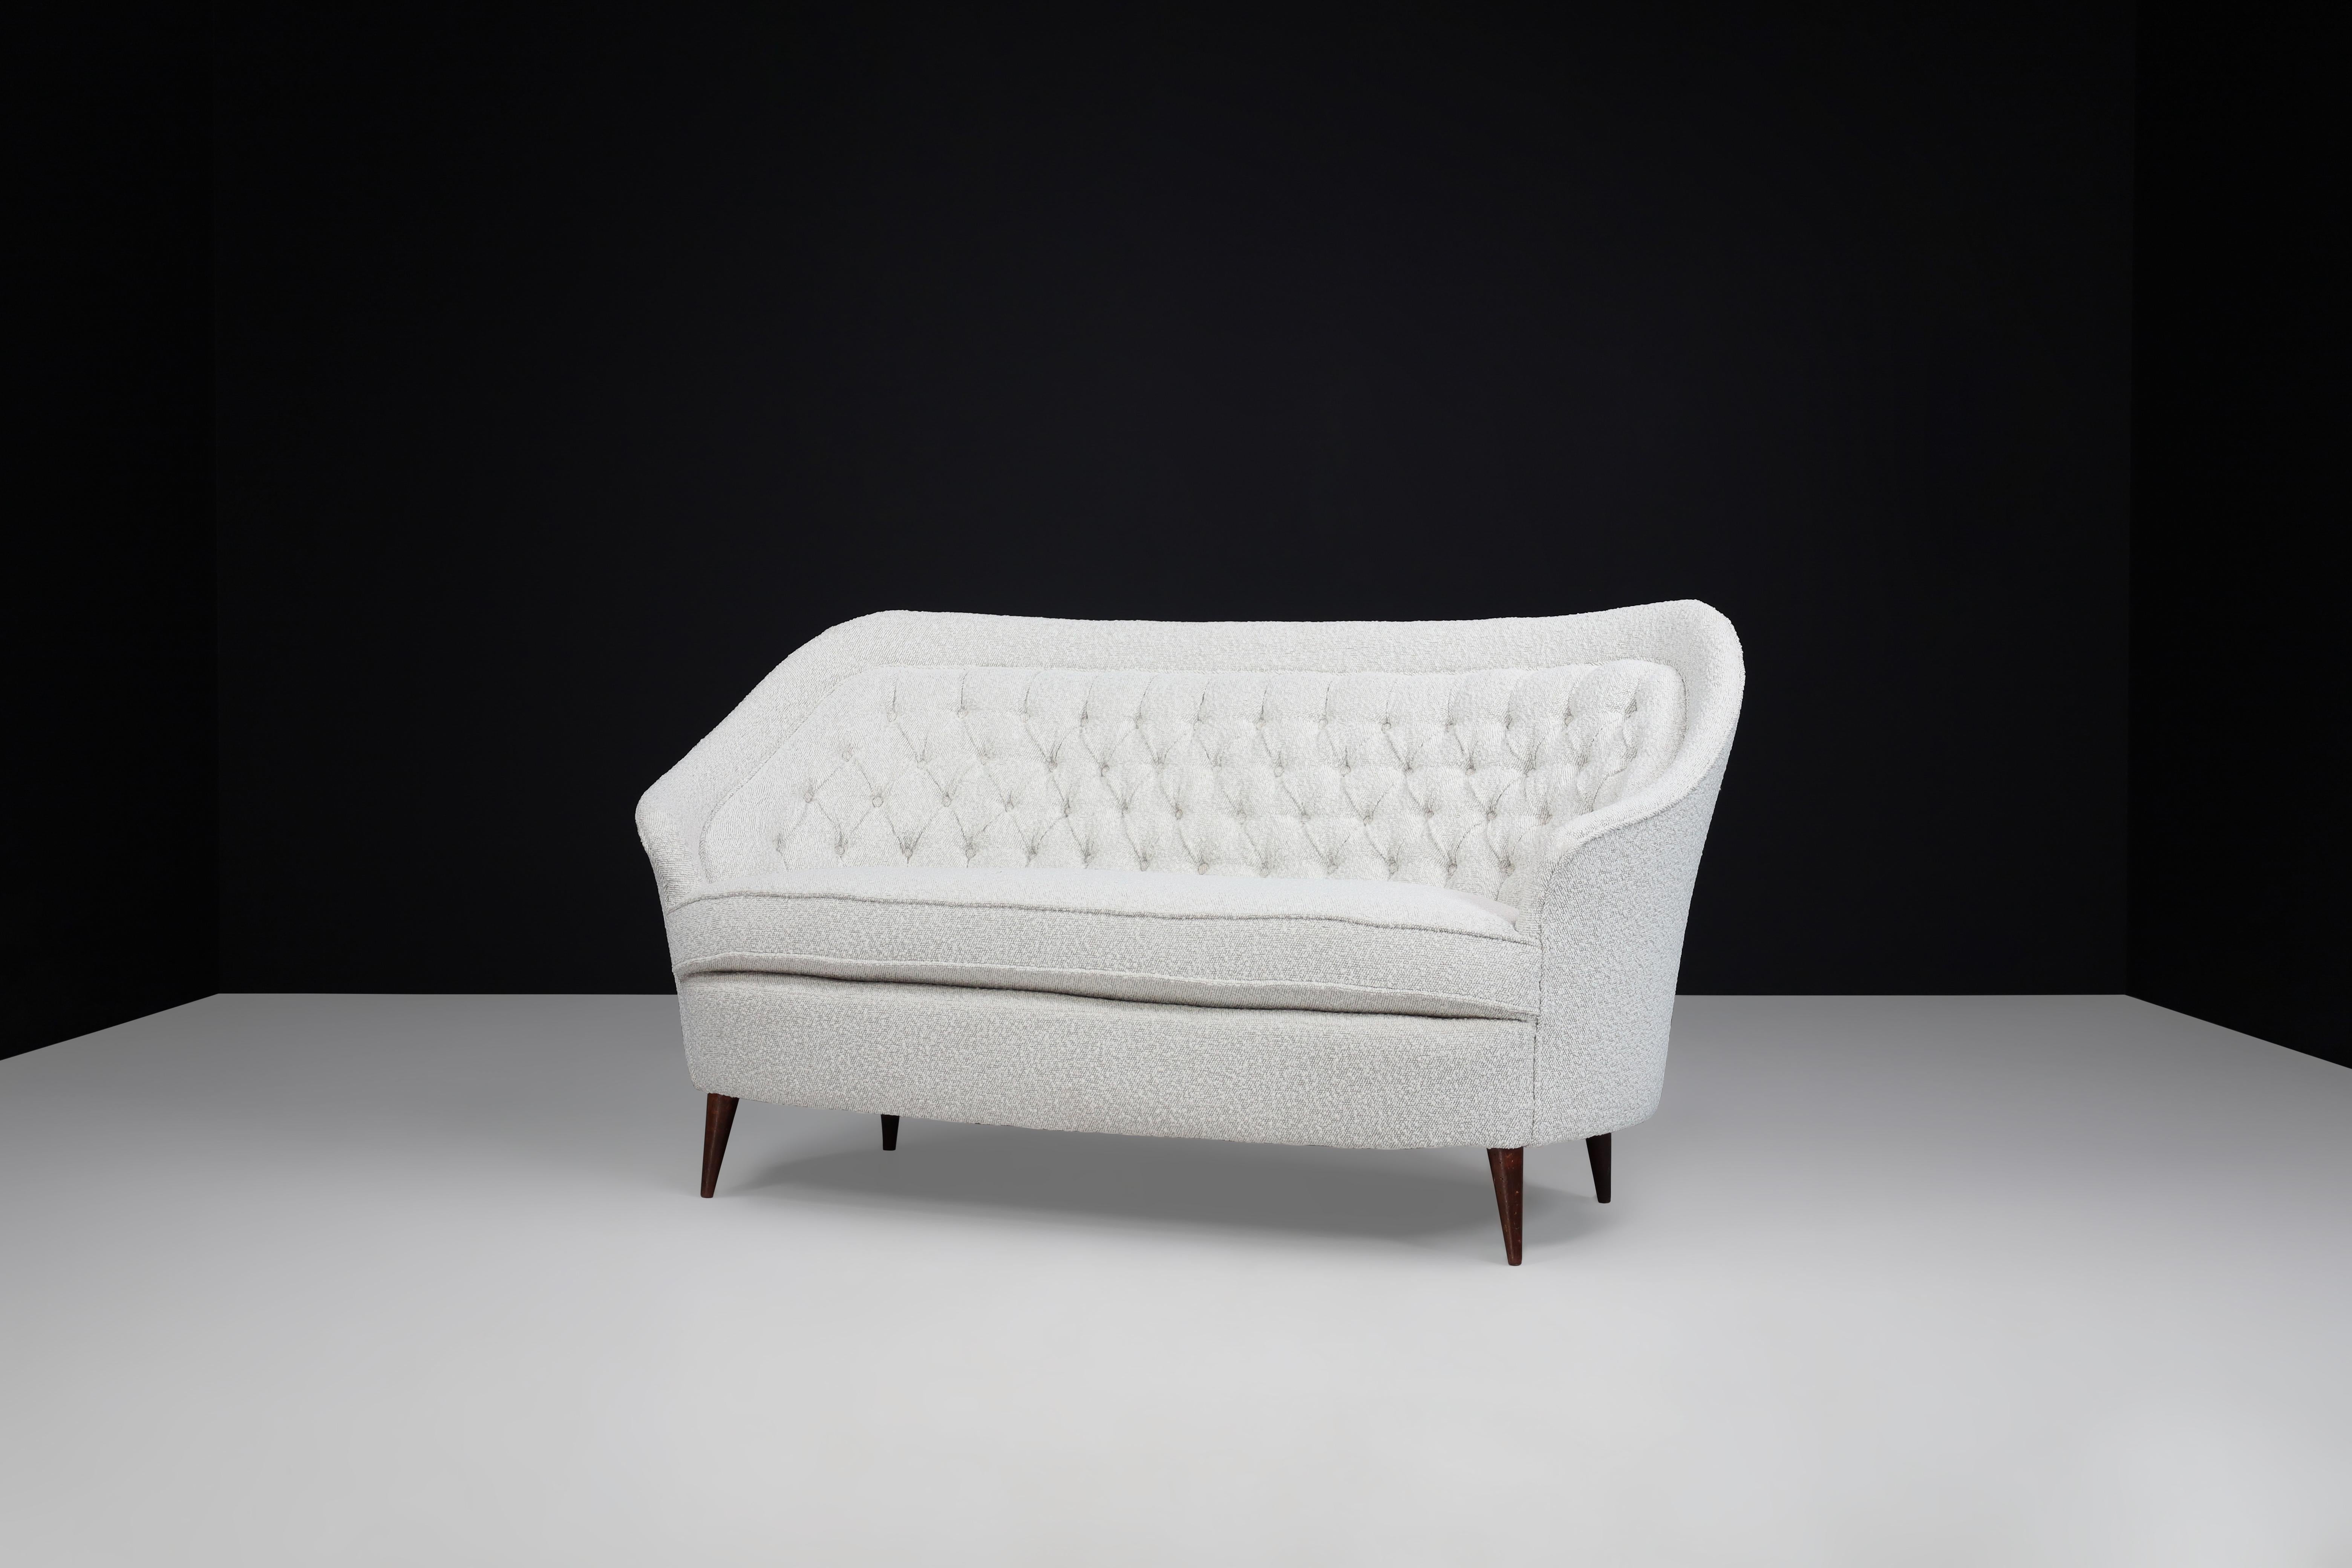 Italian Gio Ponti for Casa E Giardino Midcentury Sofa in Bouclé Upholstery Italy 1940s  For Sale